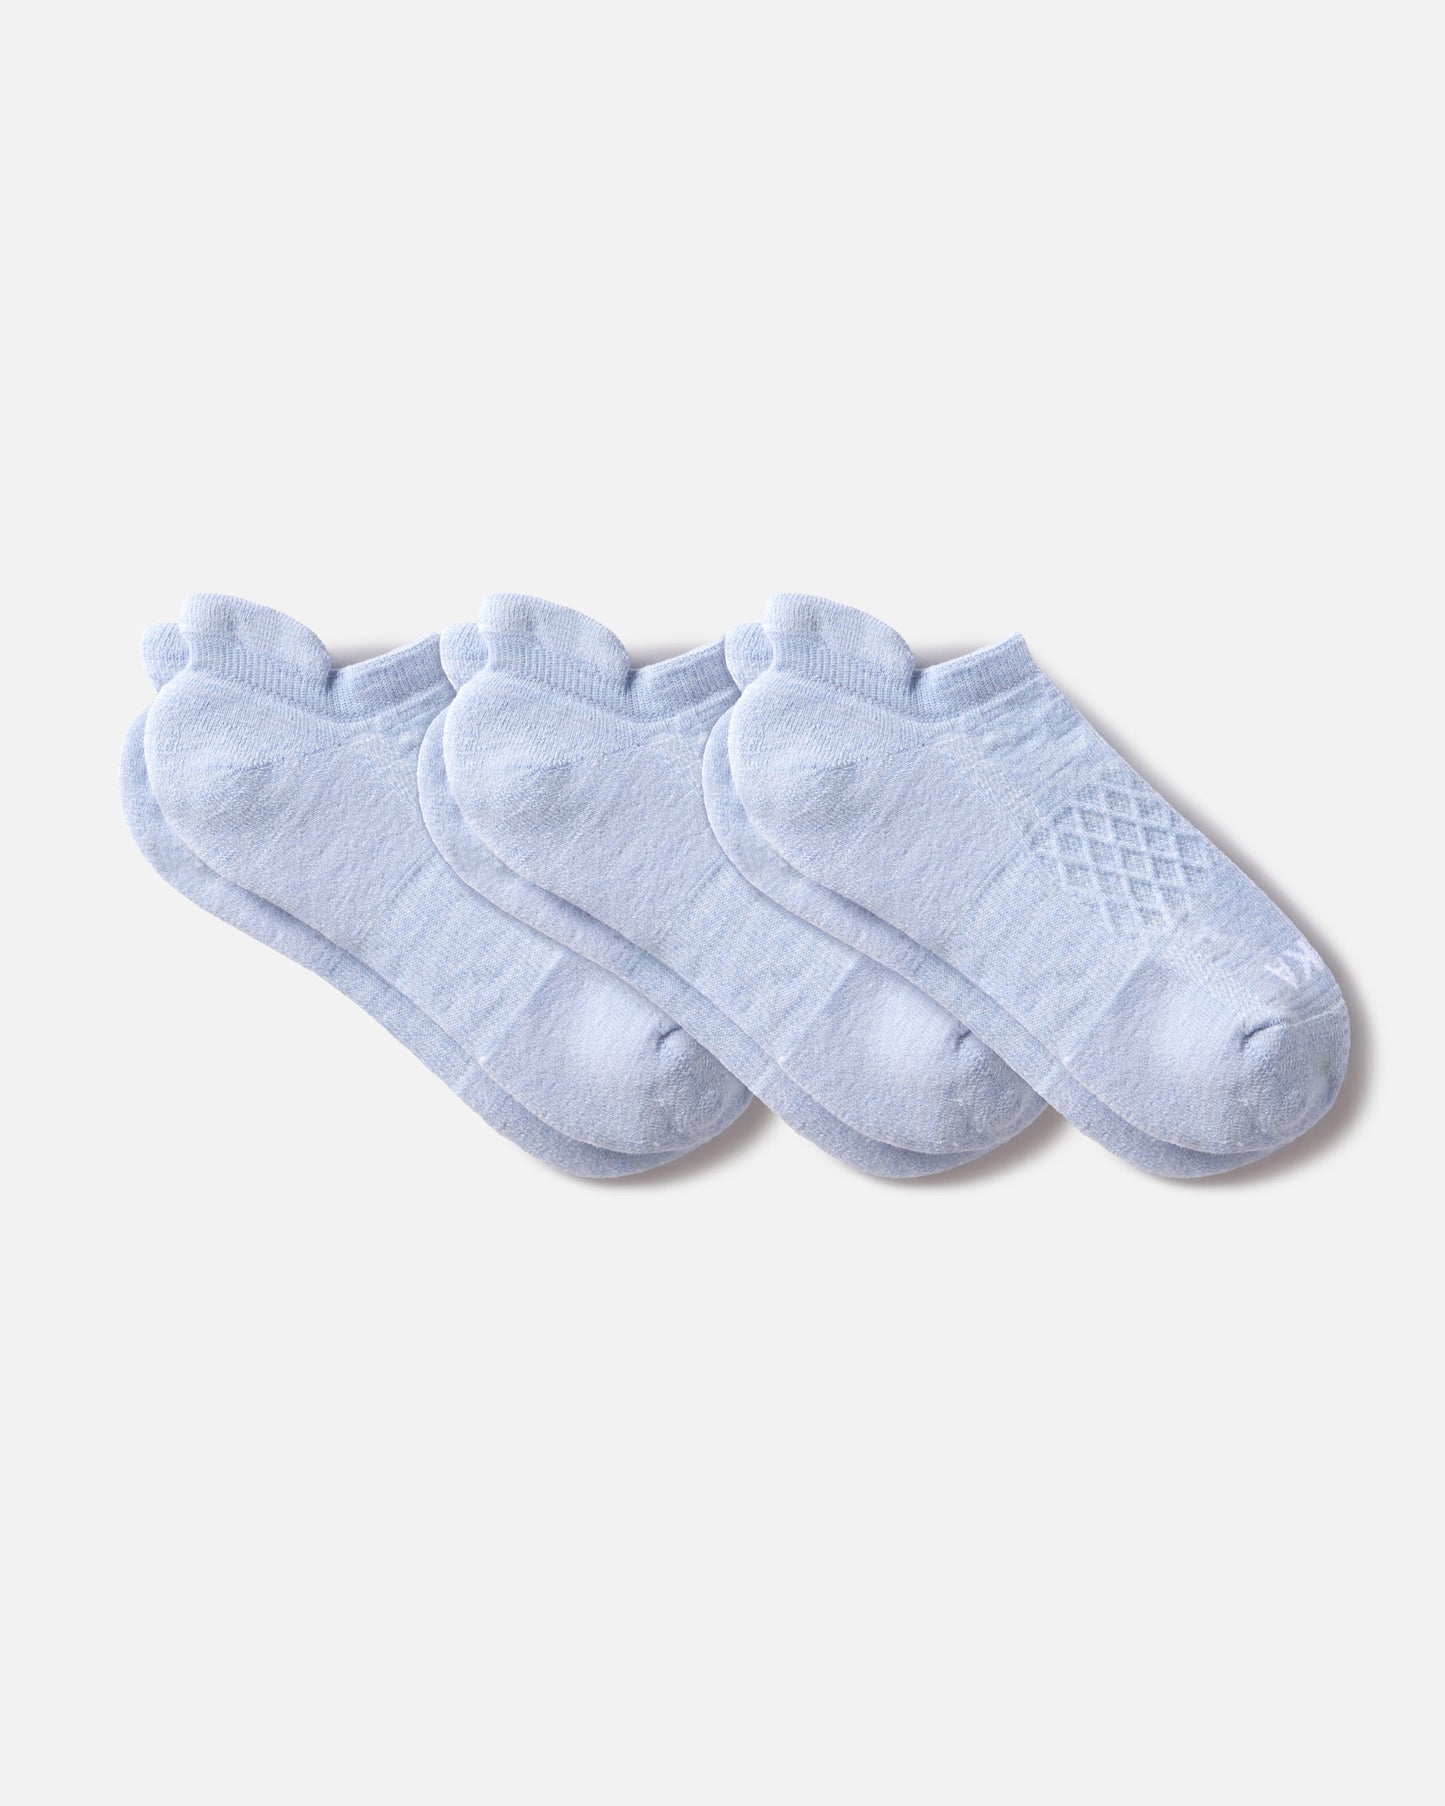 3 pairs of light blue color alpaca wool ankle socks